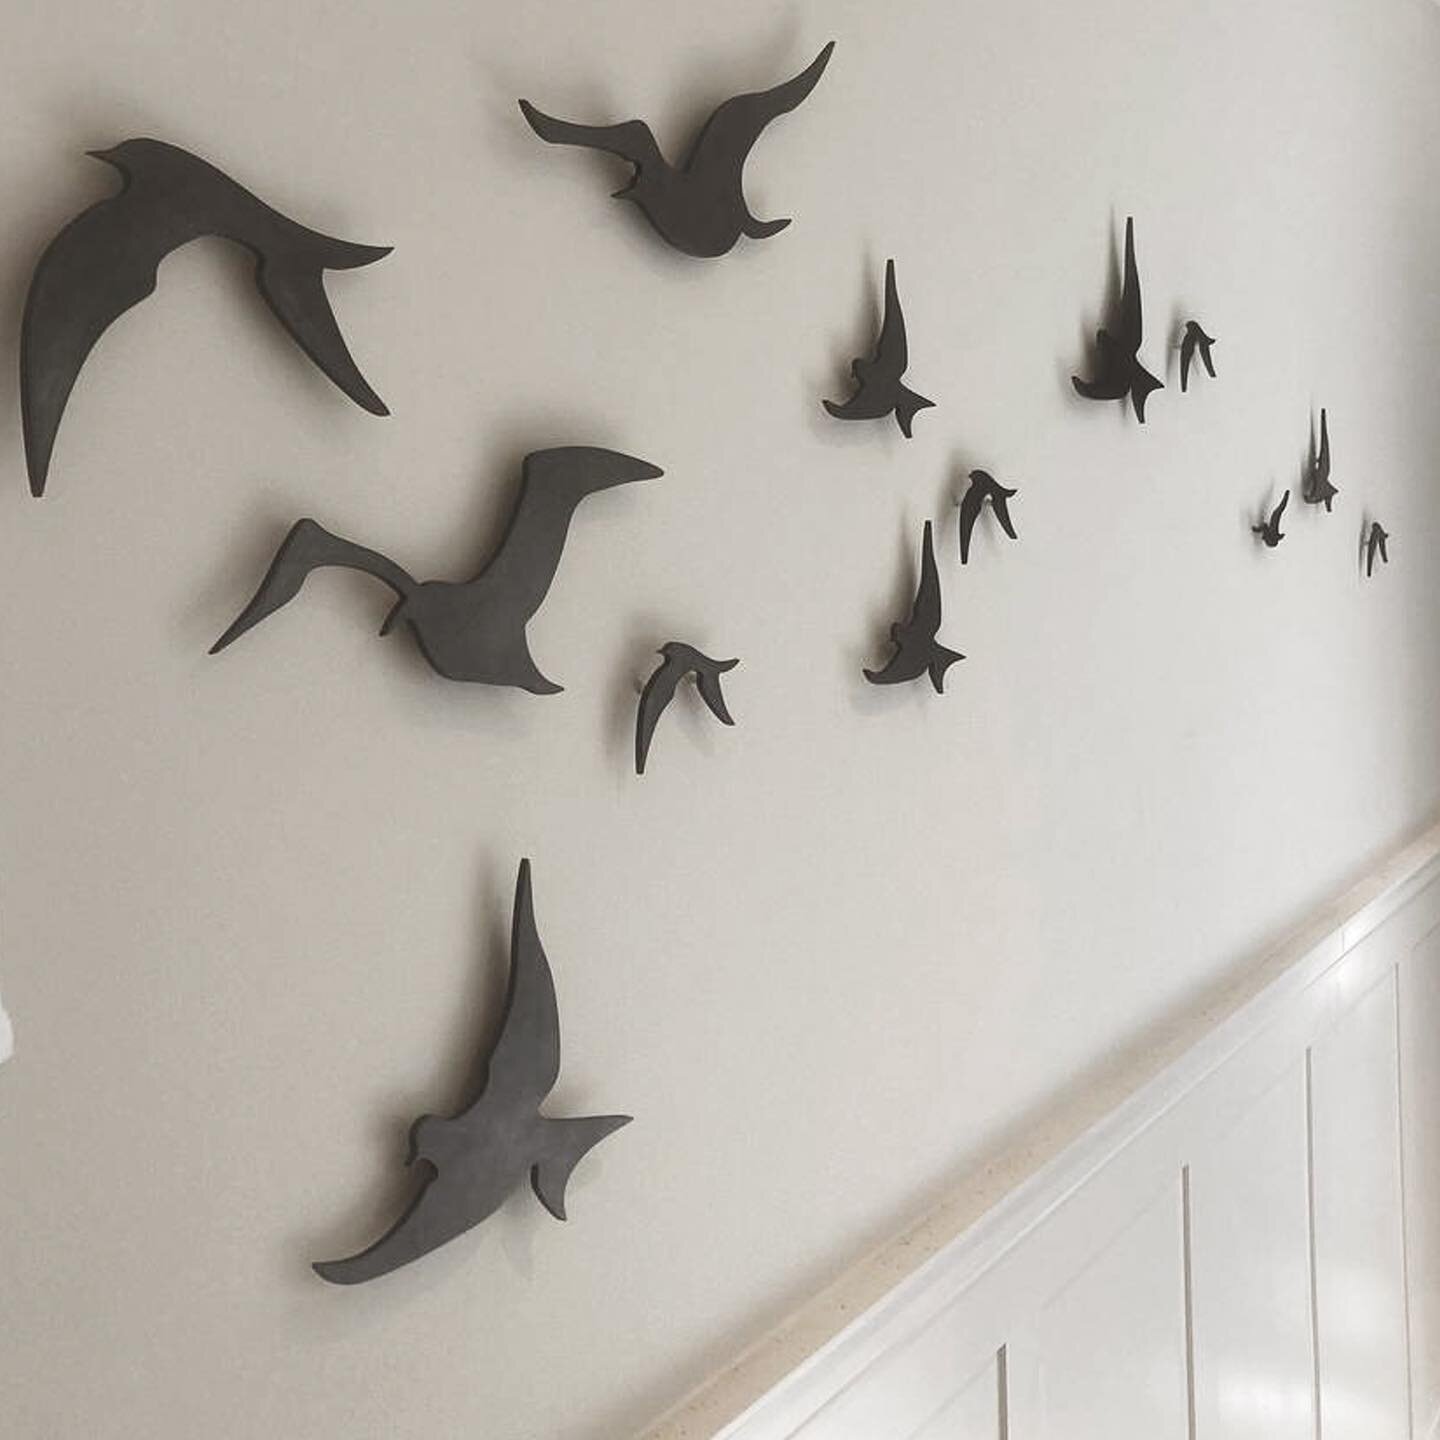 Handmade bronze birds in flight
.
#private #residence #bronze #art #home #interiors #artisan #made